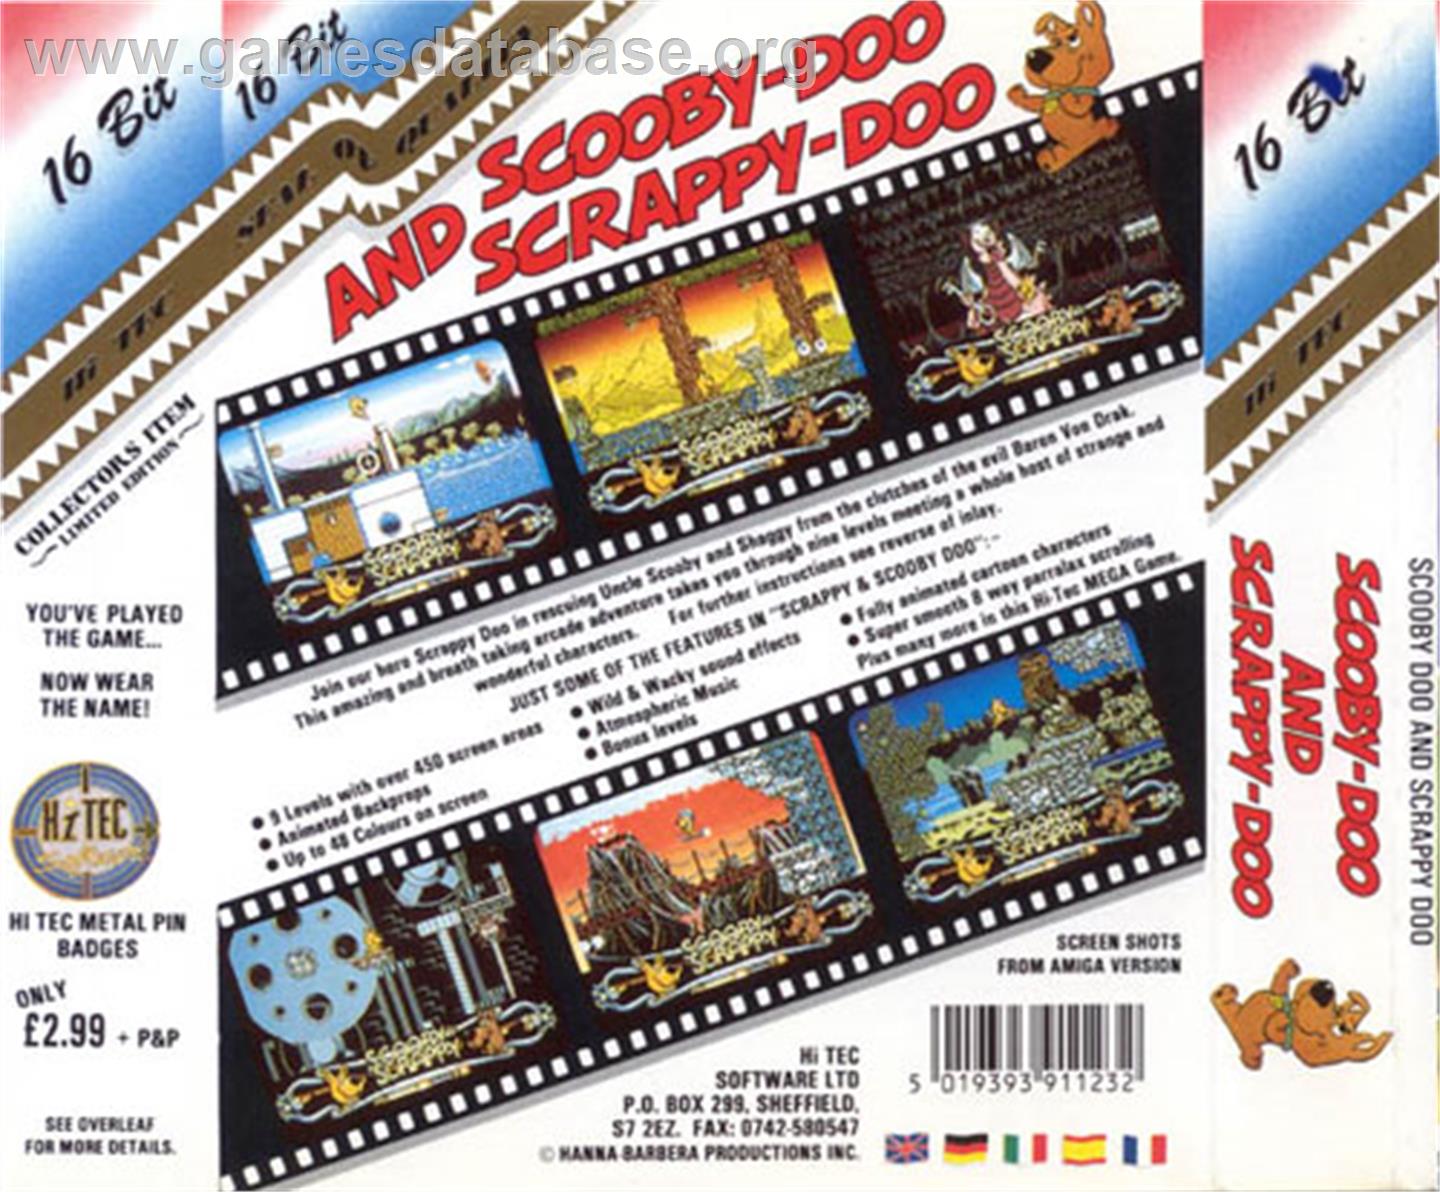 Scooby Doo and Scrappy Doo - Atari ST - Artwork - Box Back